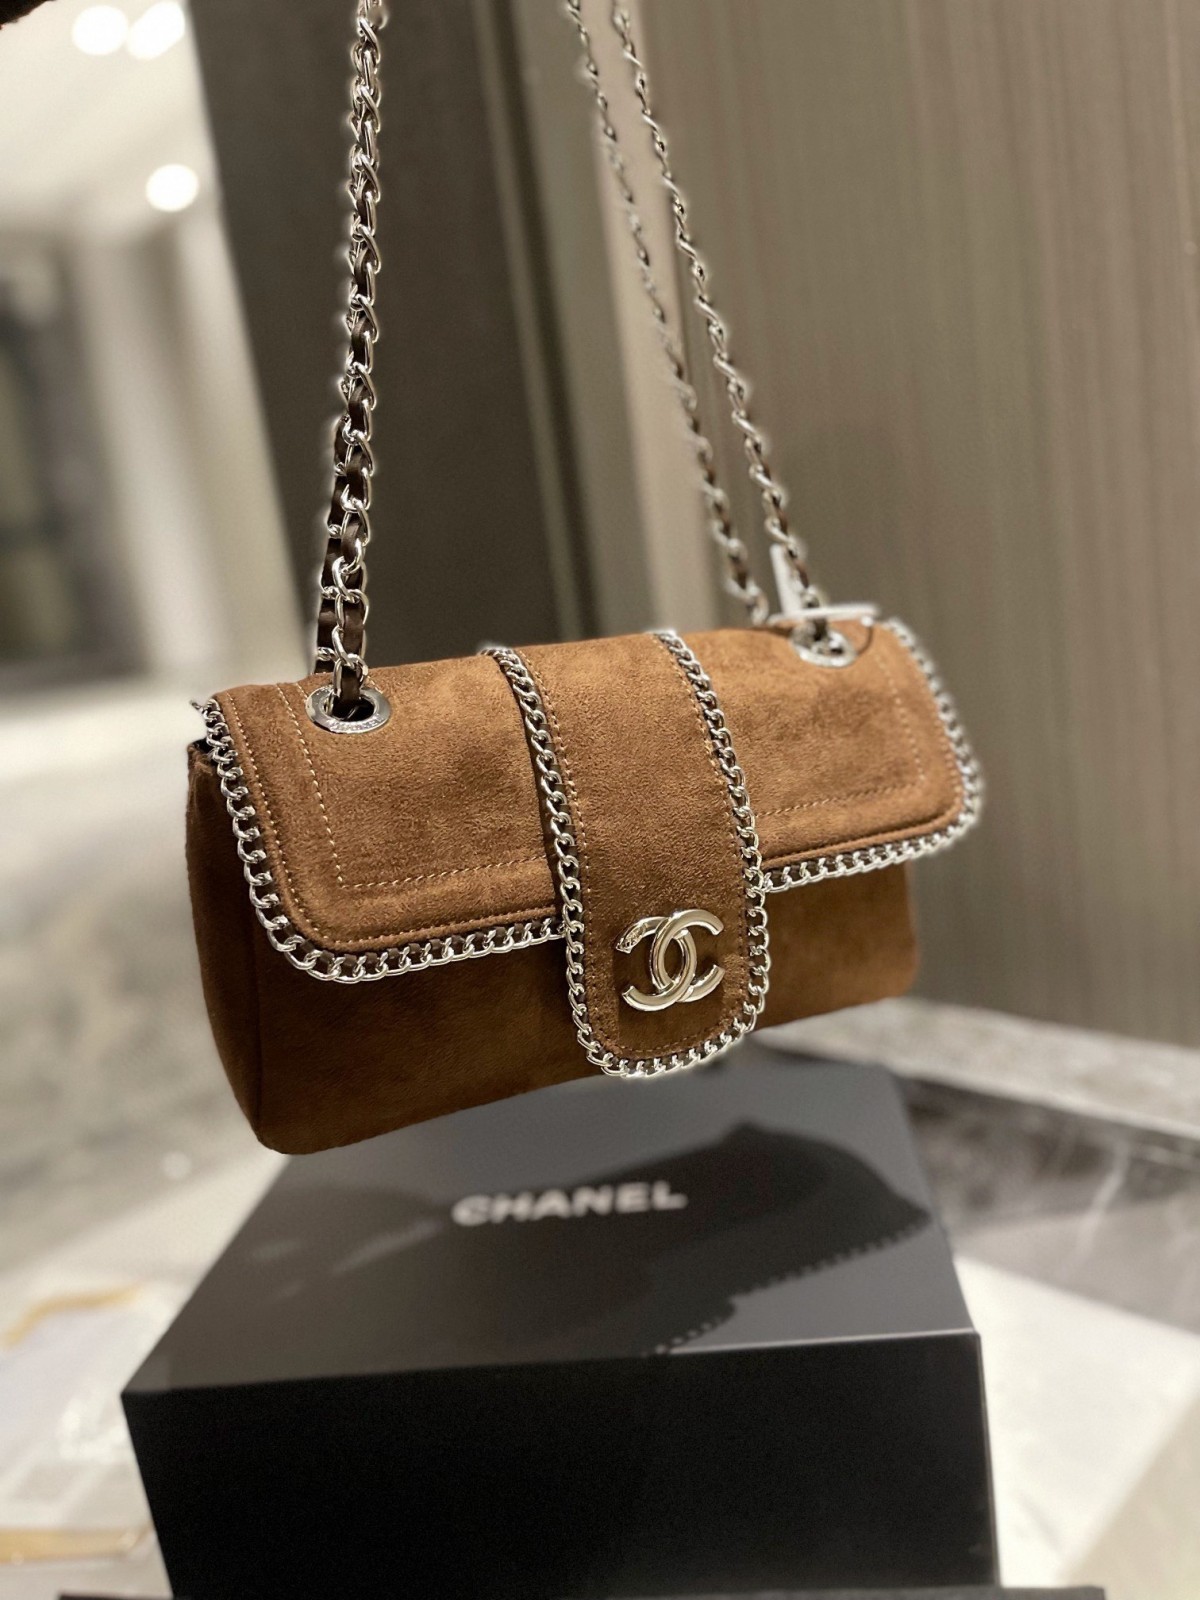 د غوره کیفیت نقل کڅوړه ټولګه: چینل (2022 تازه شوی)-Best Quality Fake Louis Vuitton Bag Online Store, Replica designer bag ru